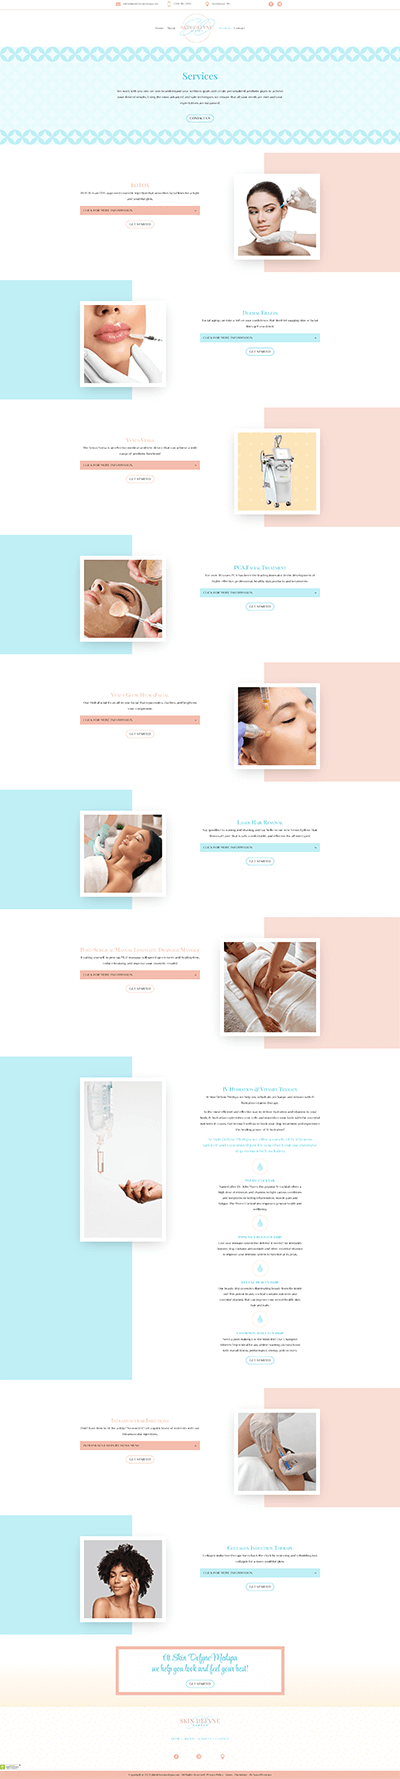 natural-beauty-services-website-design